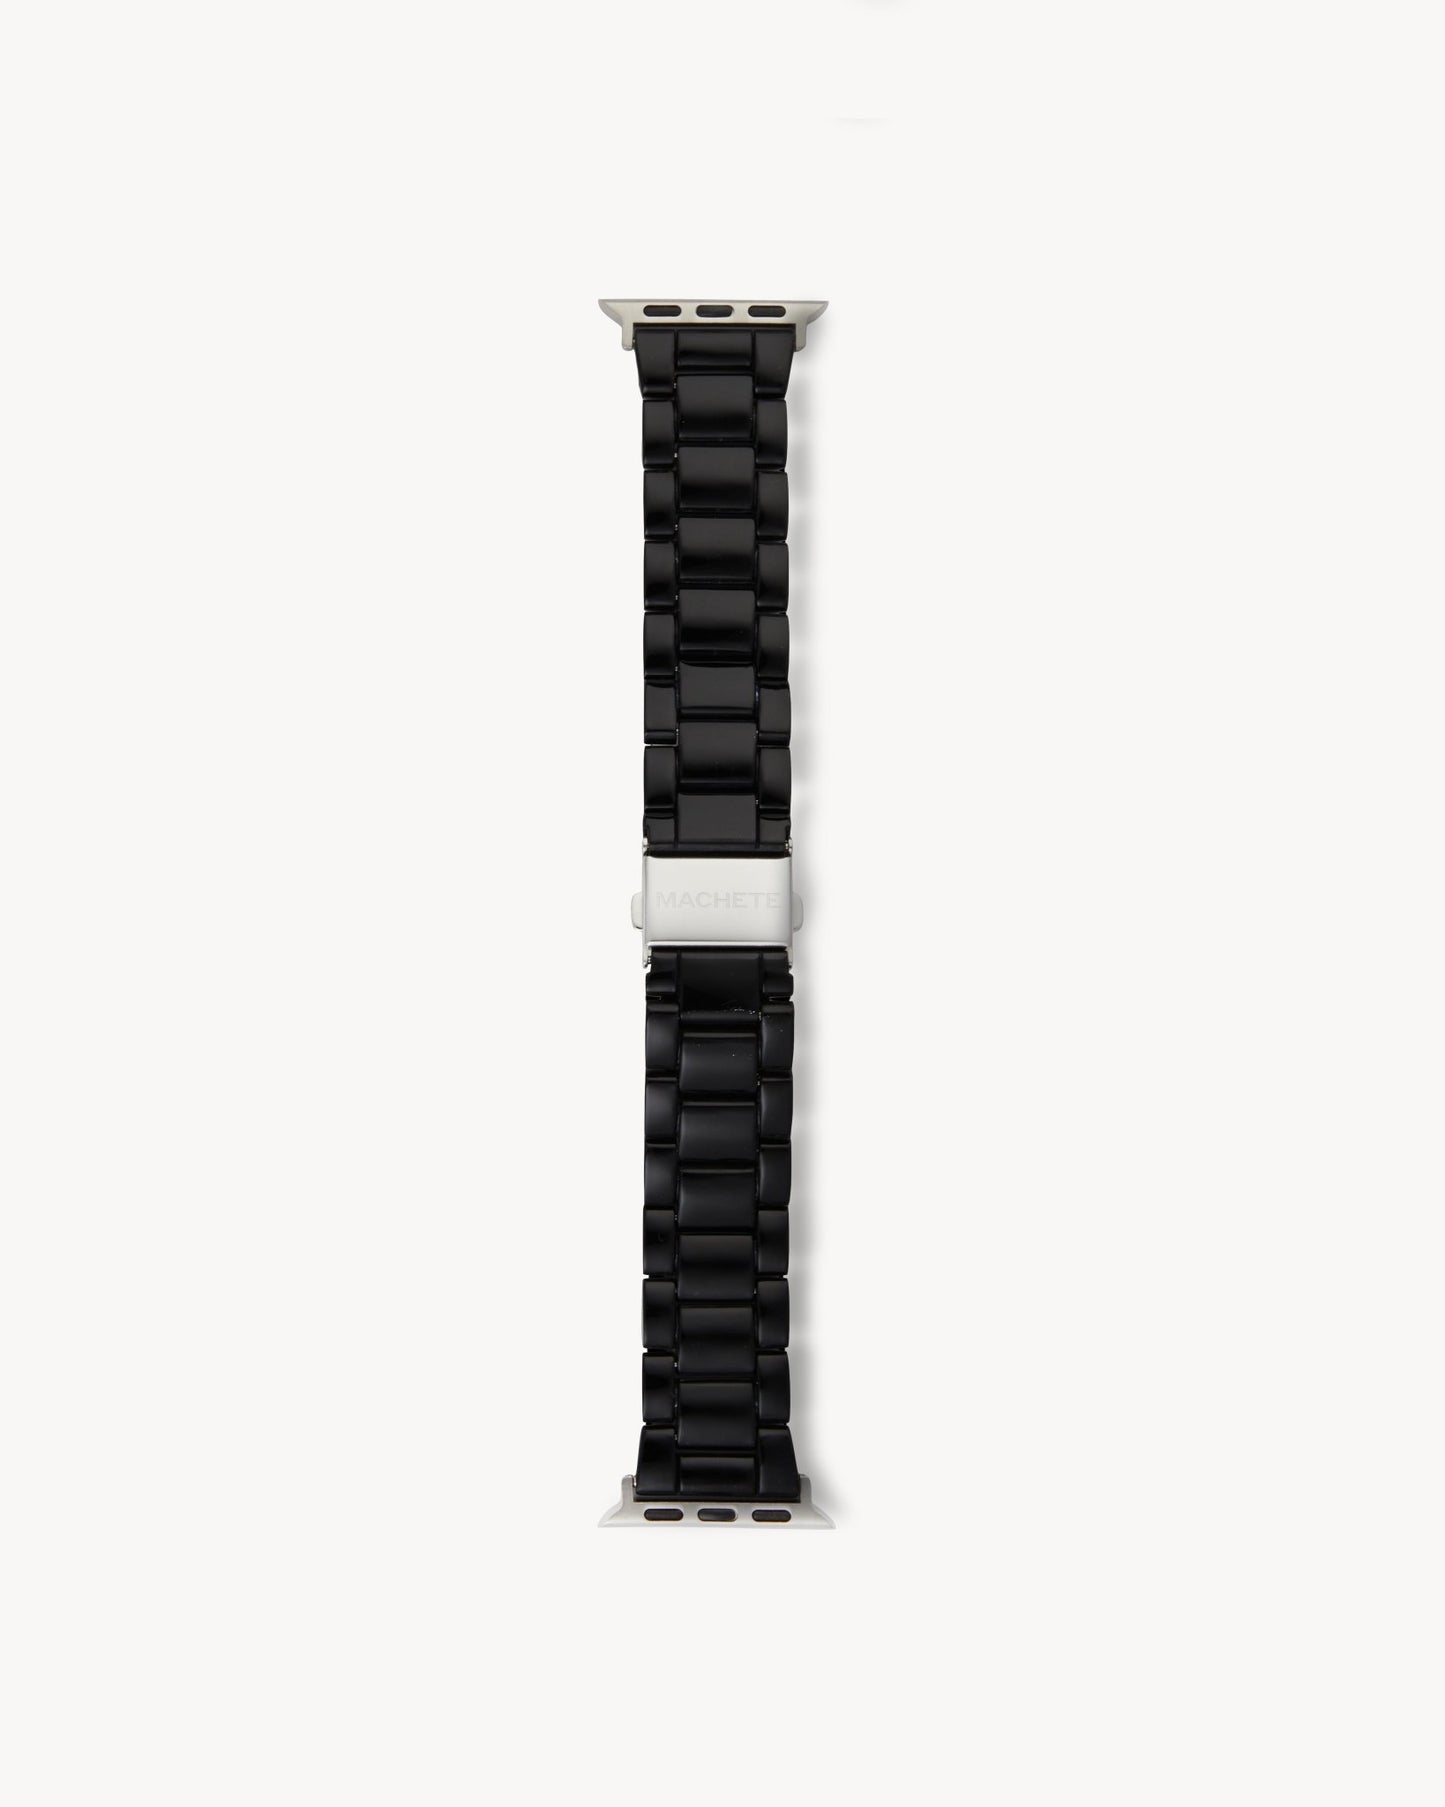 MACHETE Deluxe Apple Watch Band Set in Black